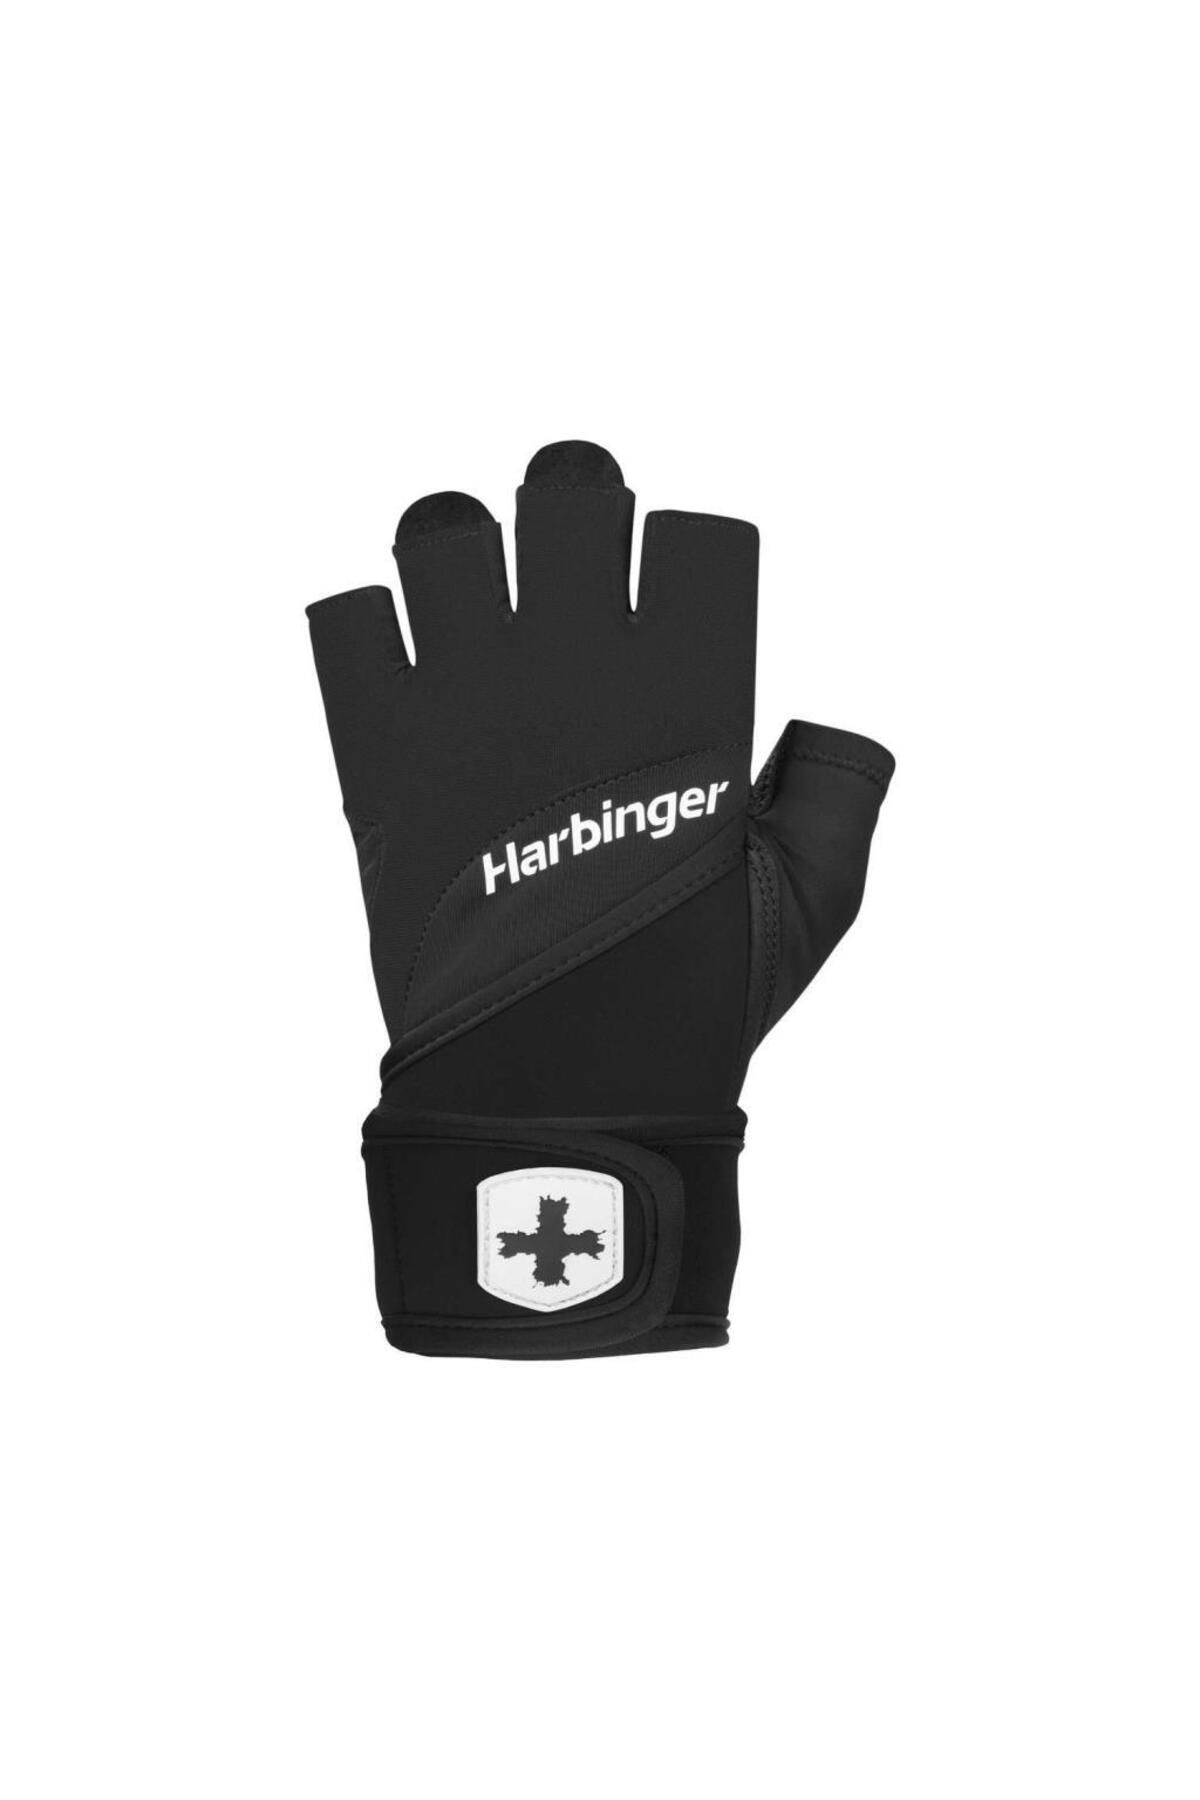 Harbinger 22292 Training Grip Wrist Wrap Fitness Eldiveni